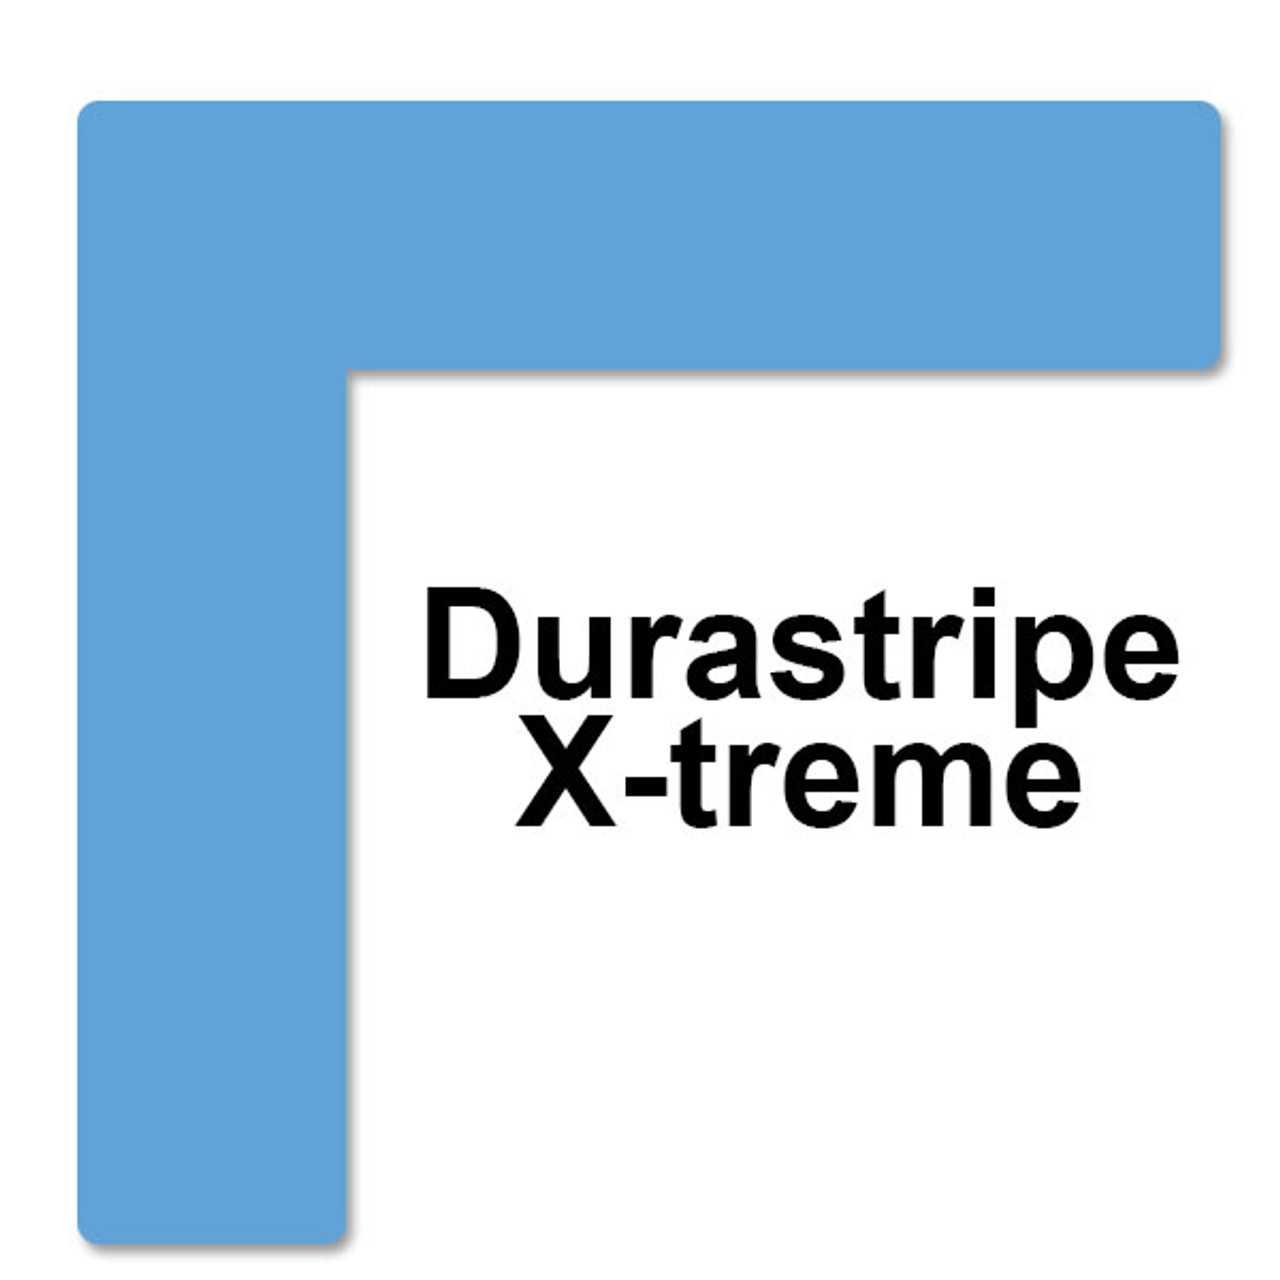 Durastripe Xtreme 90 Degree Angle - Rounded Corners - light blue